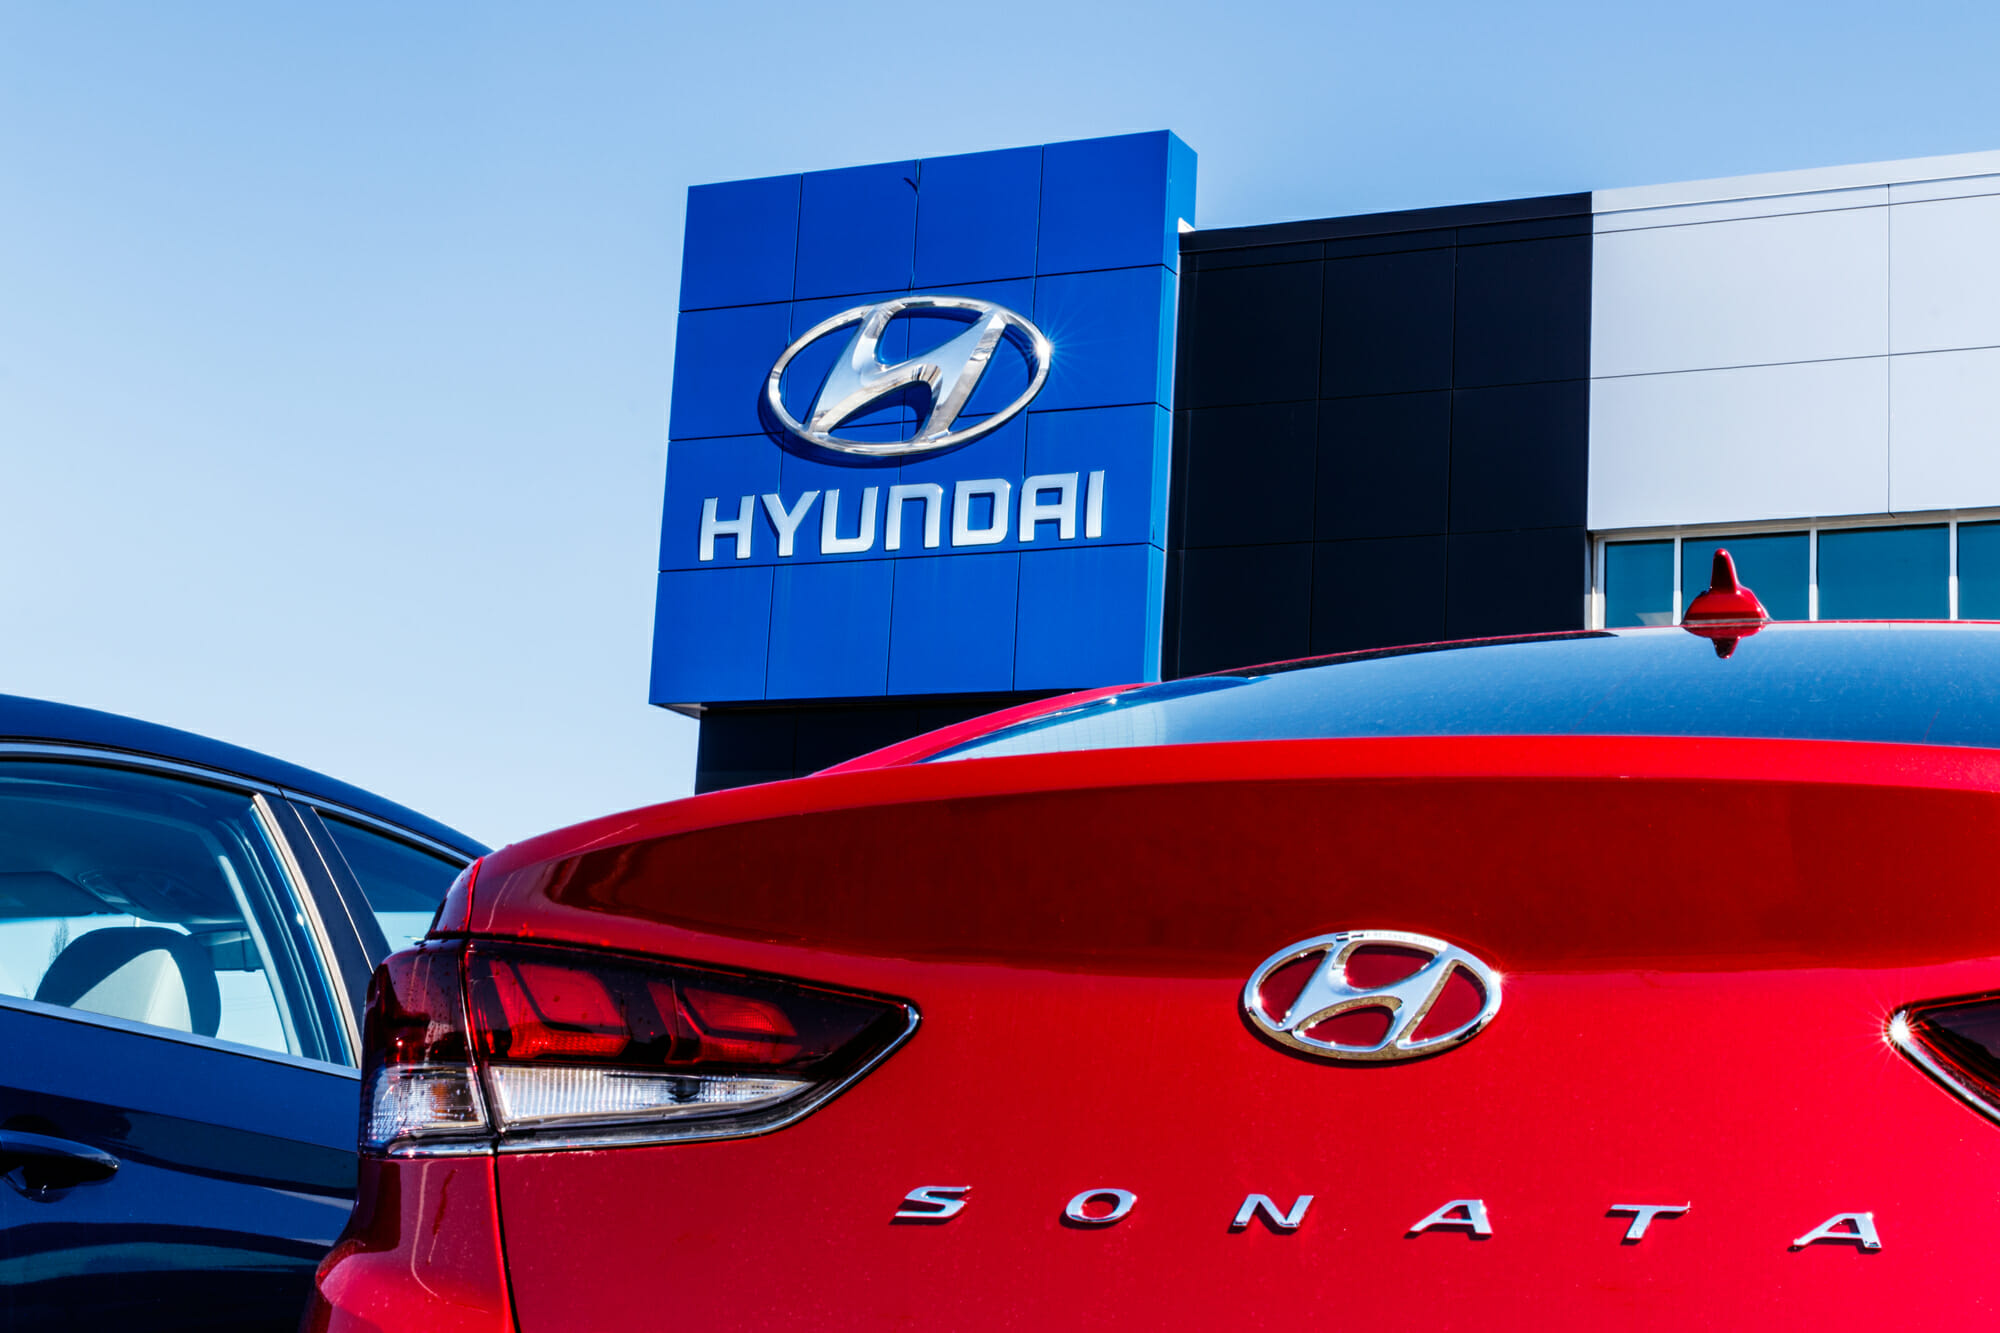 Hyundai Sonata Tires: The Best Options